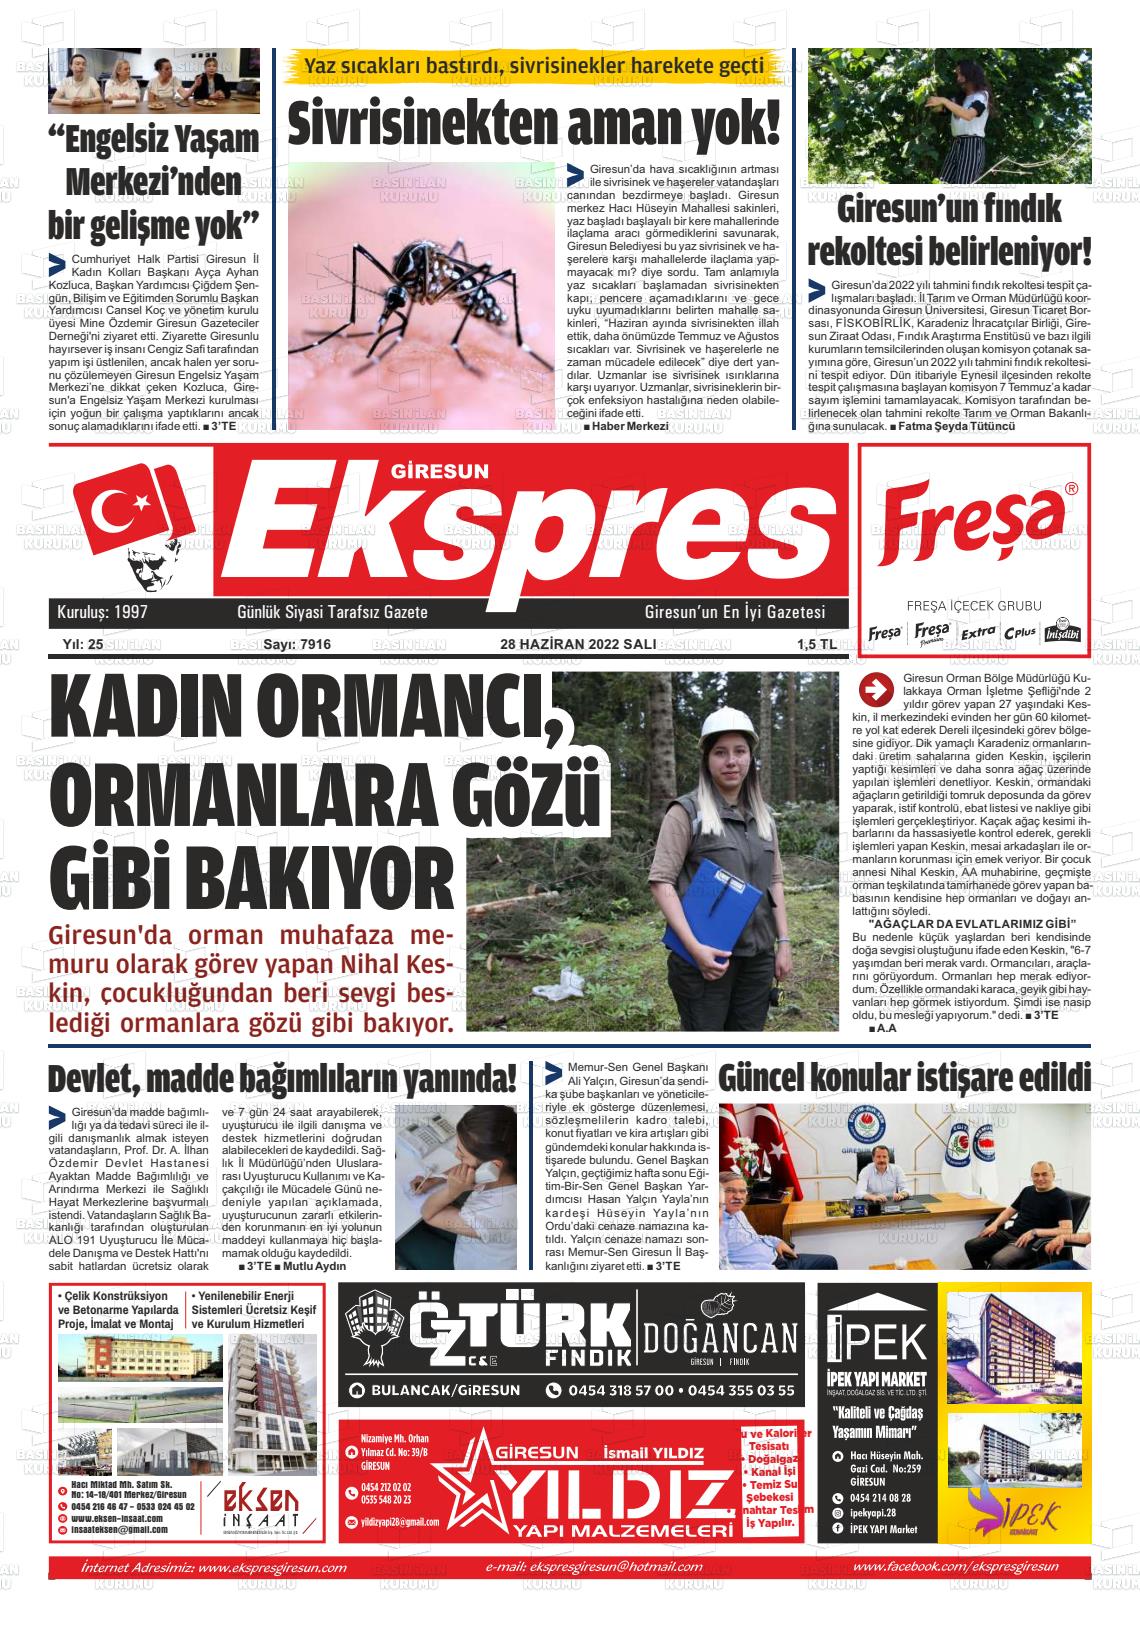 28 Haziran 2022 Giresun Ekspres Gazete Manşeti